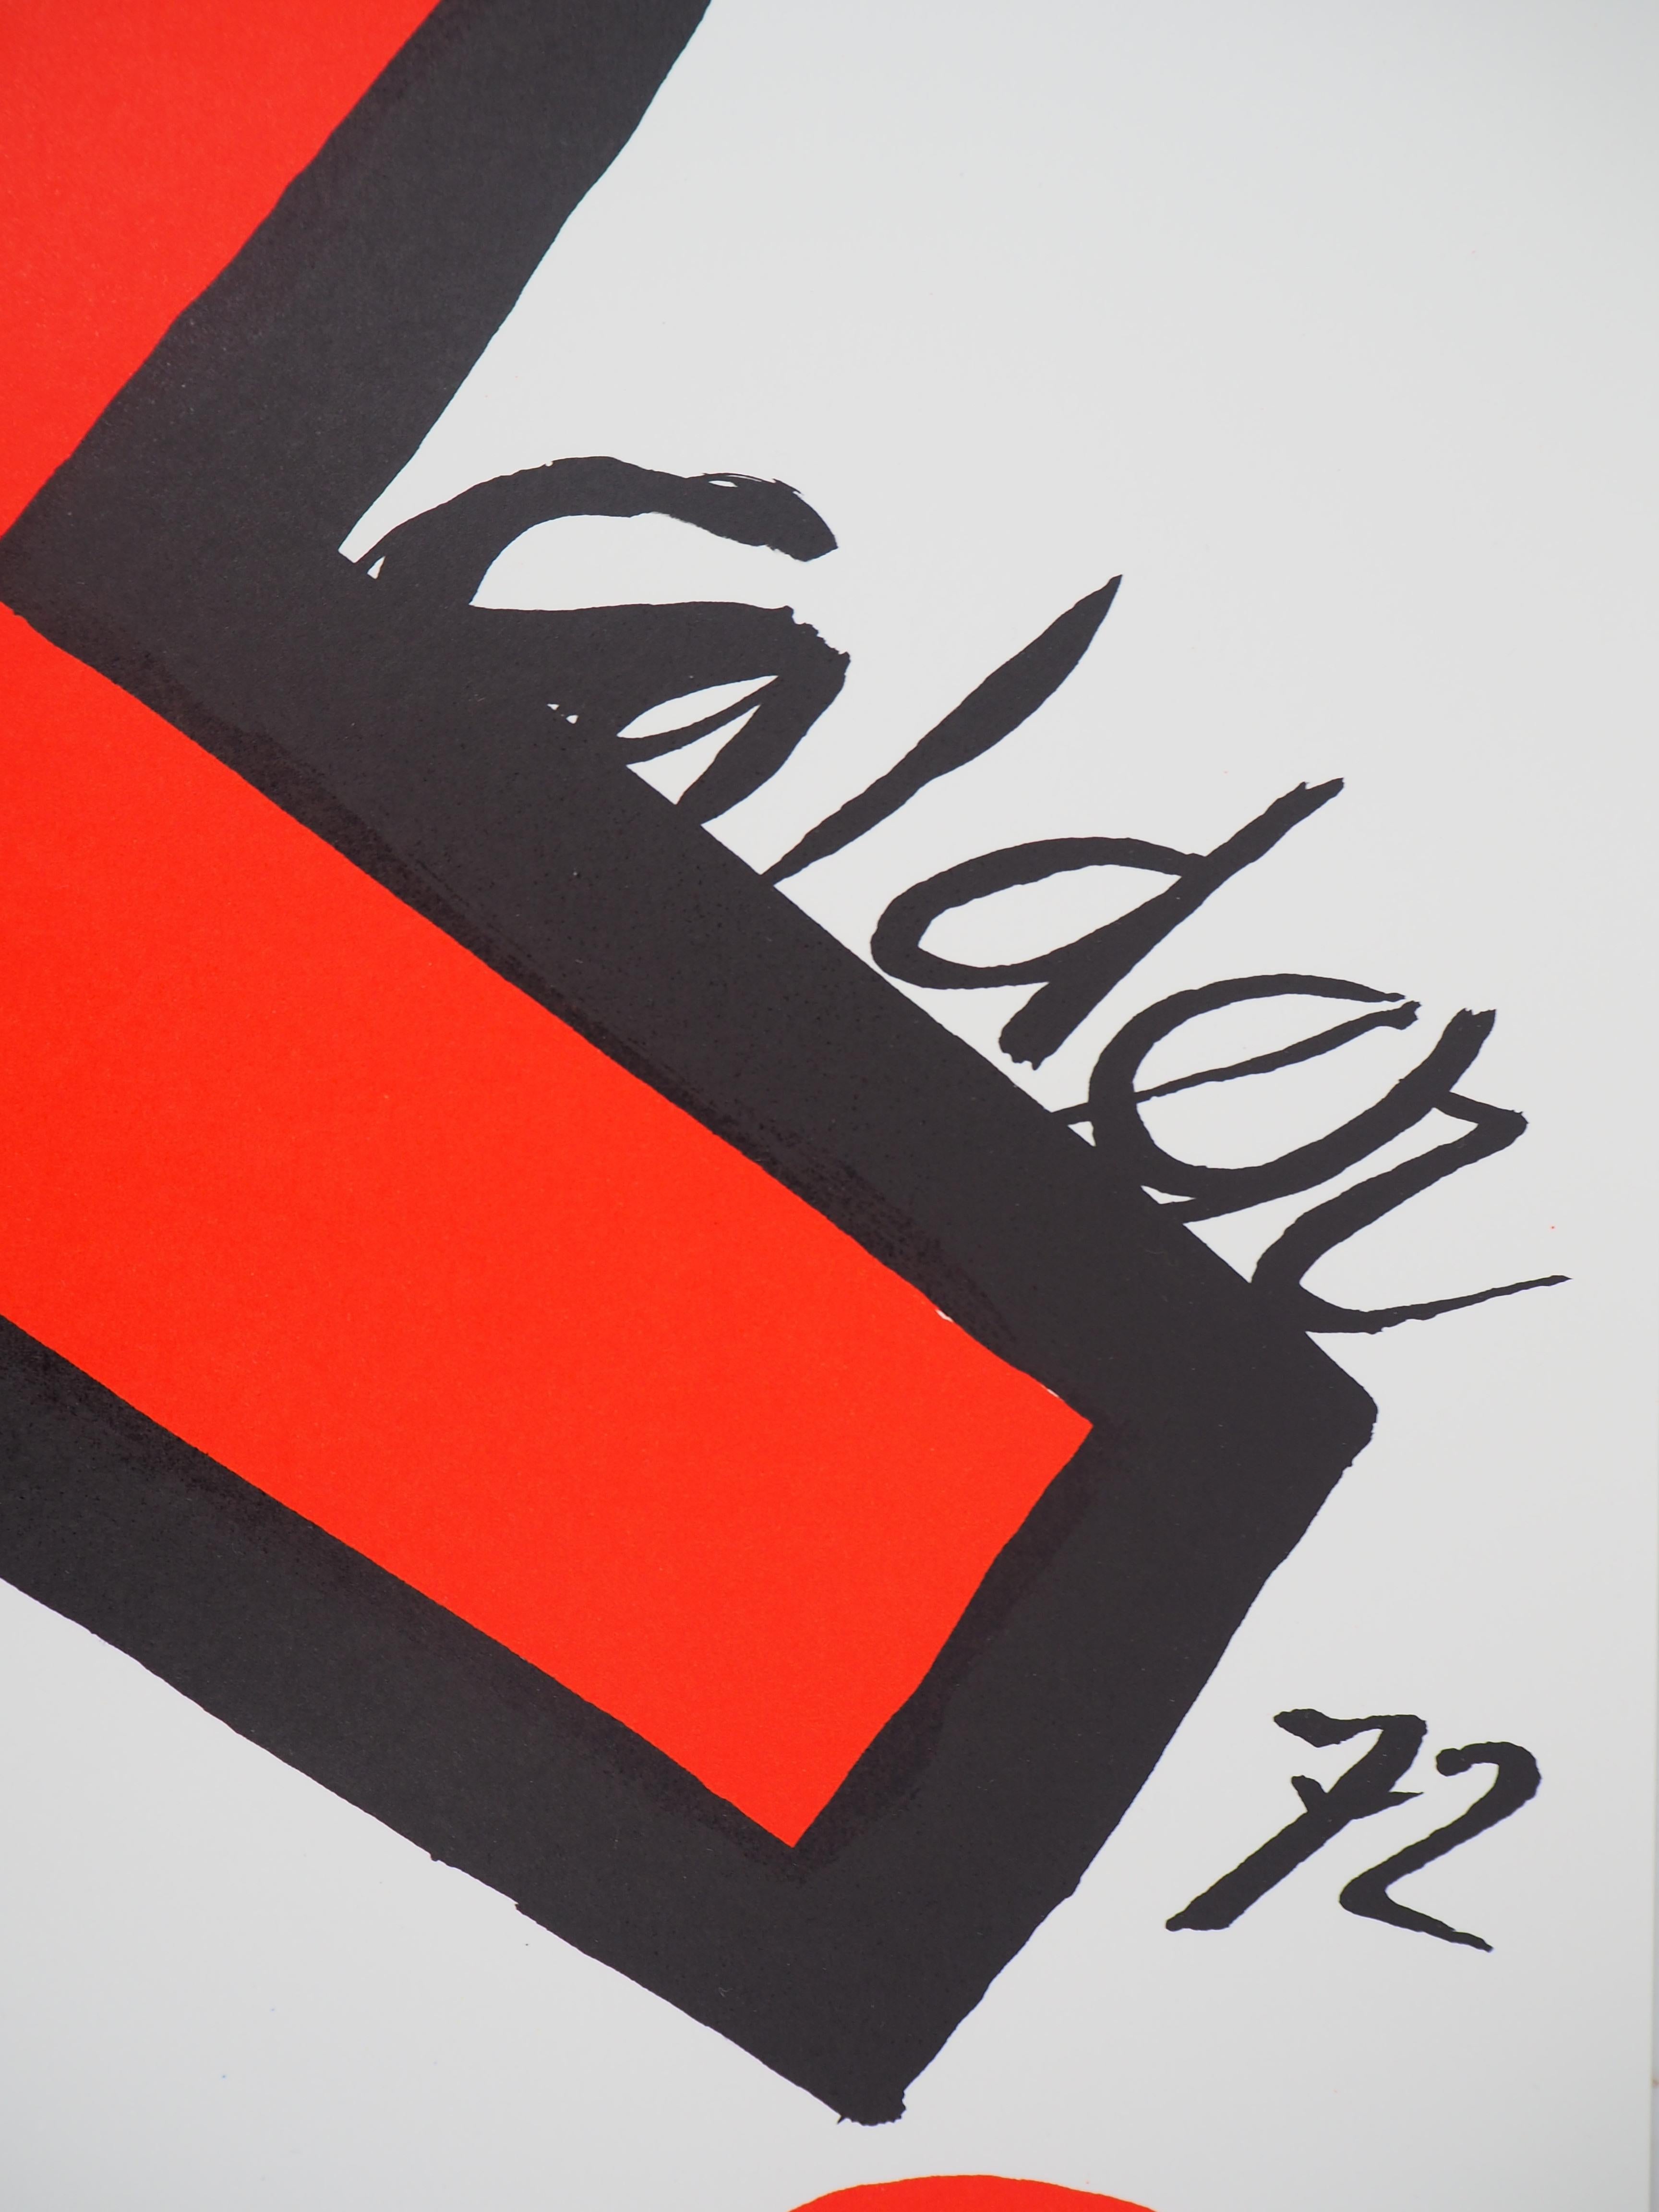 Abstract Composition (Assymetric) - Original Lithograph - Print by Alexander Calder